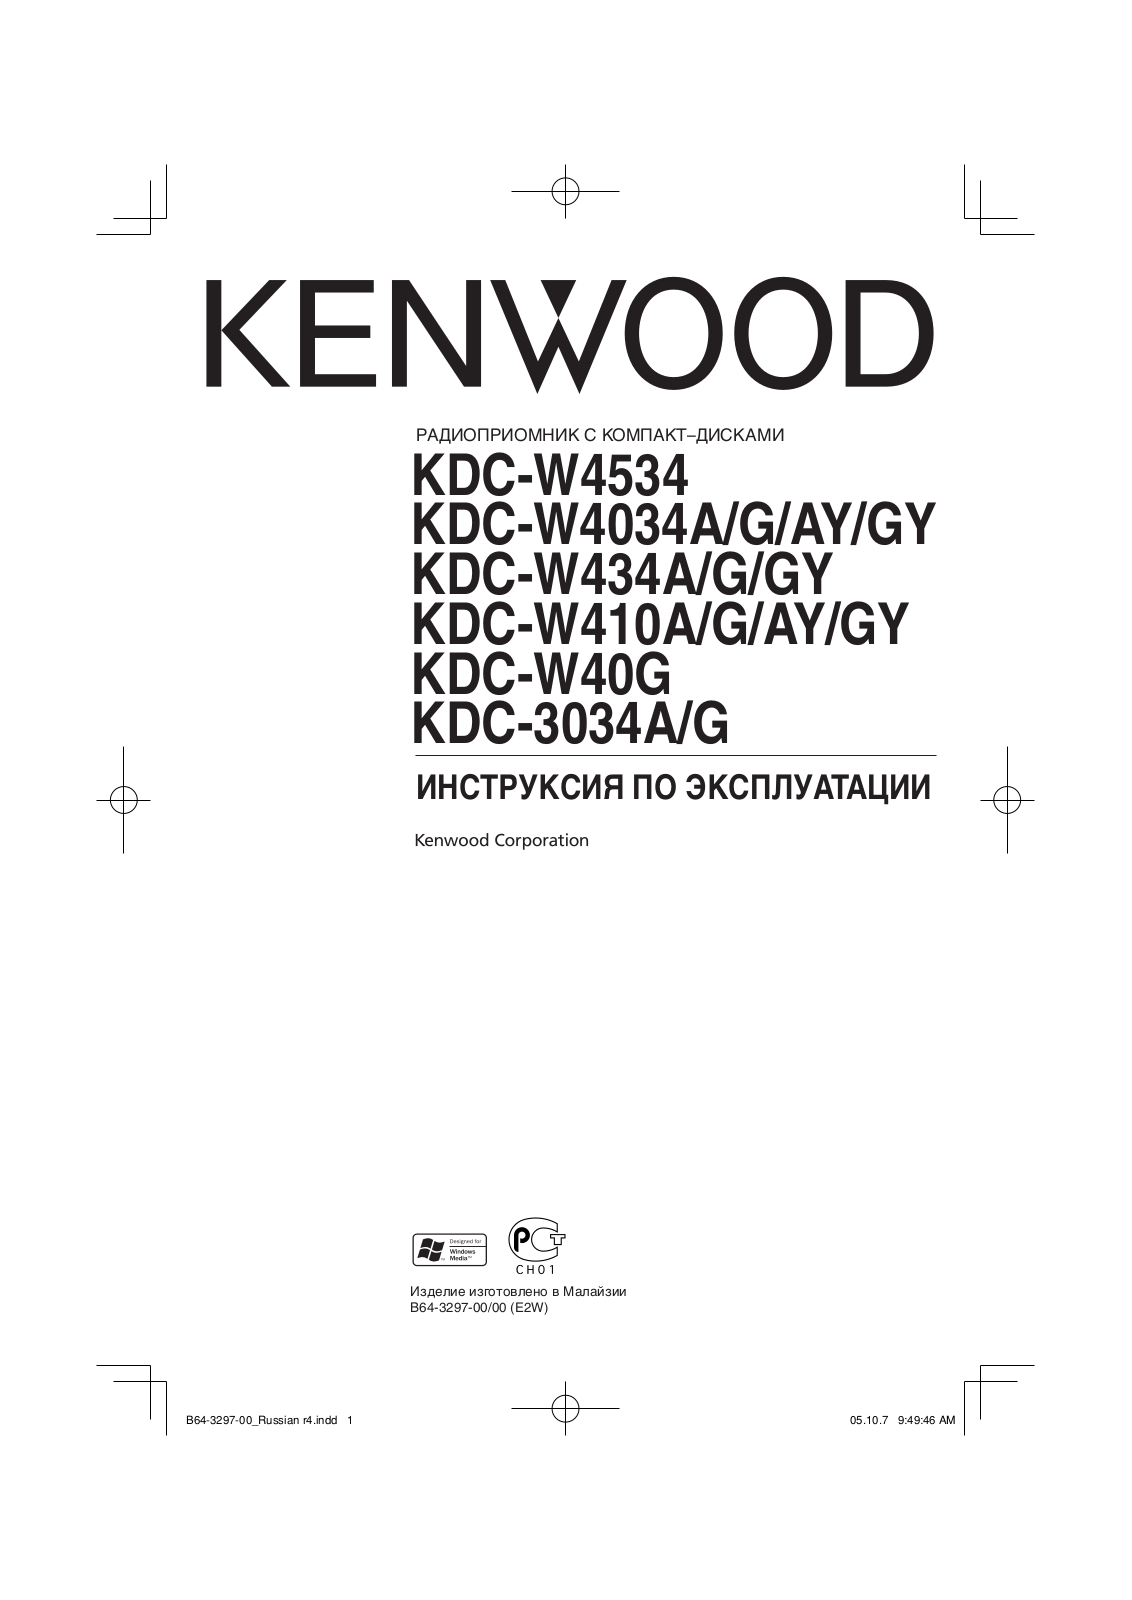 Kenwood KDC-W40G, KDC-W410A, KDC-W434A, KDC-W4034A, KDC-W4534 User Manual